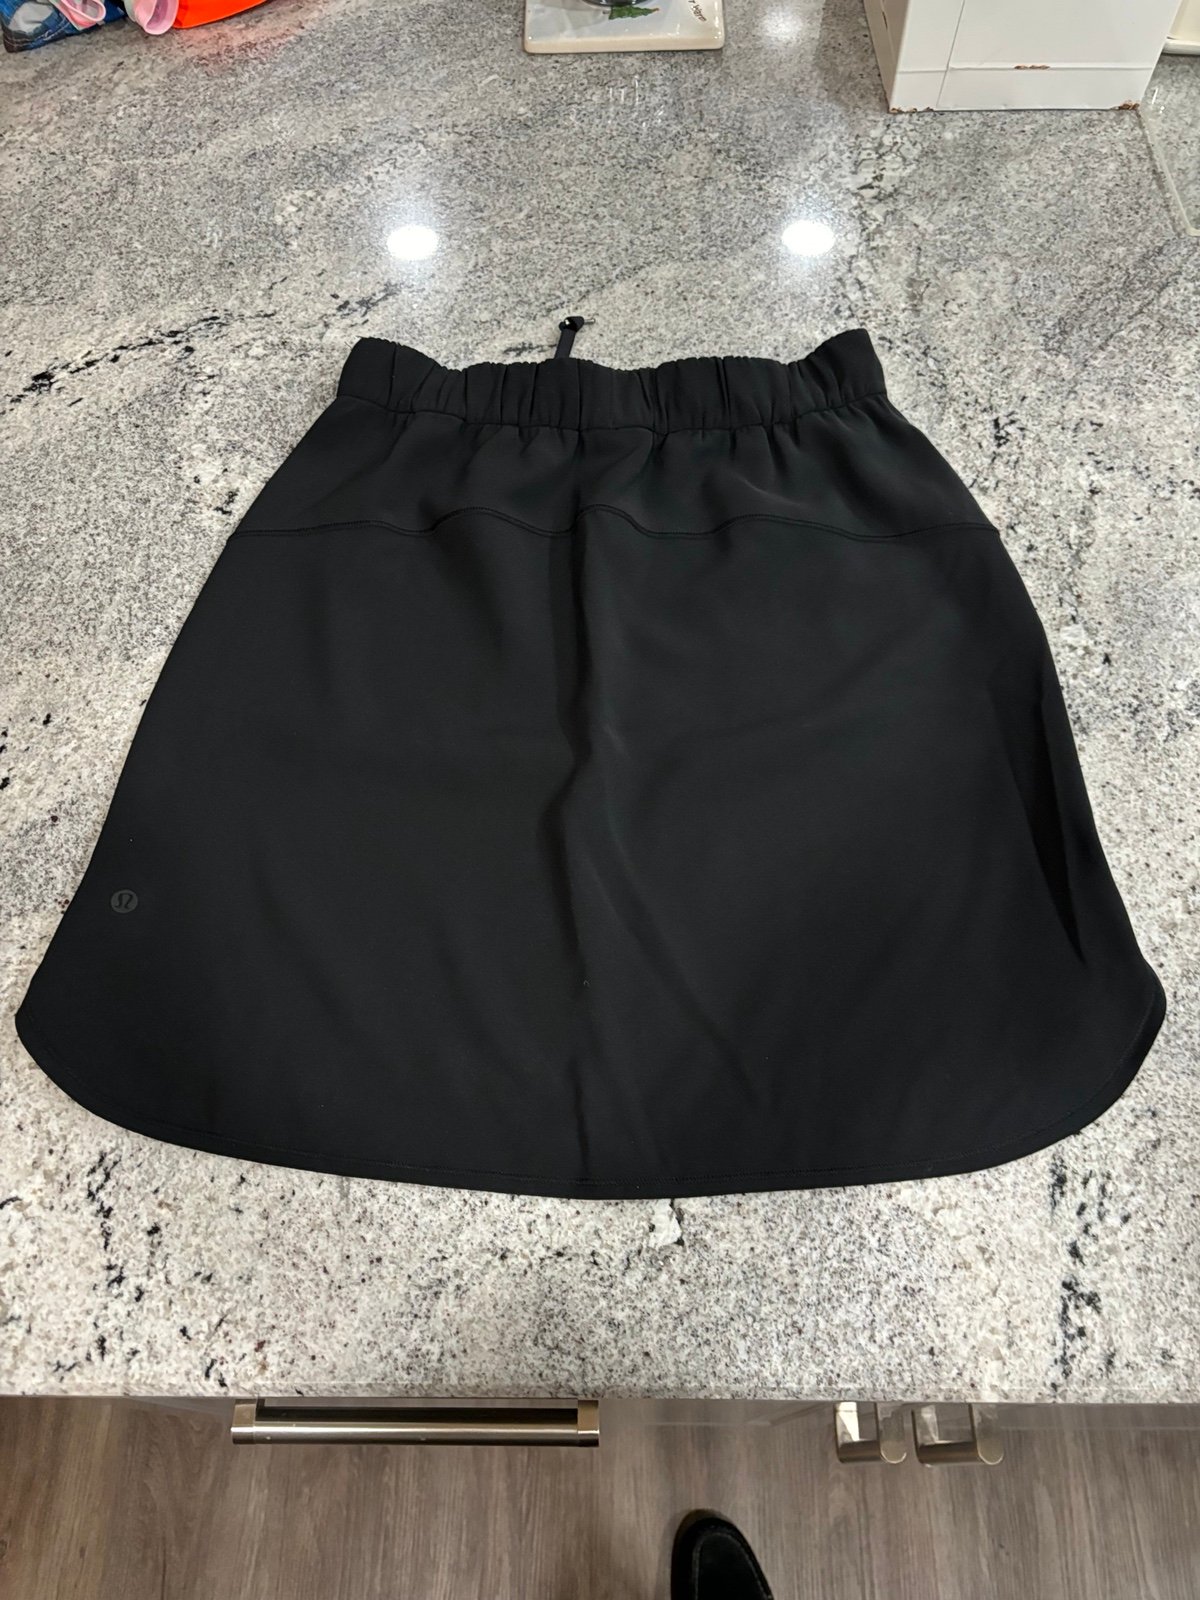 Simple Black Lululemon Skirt knee length 20” ipZiu2dzx no tax